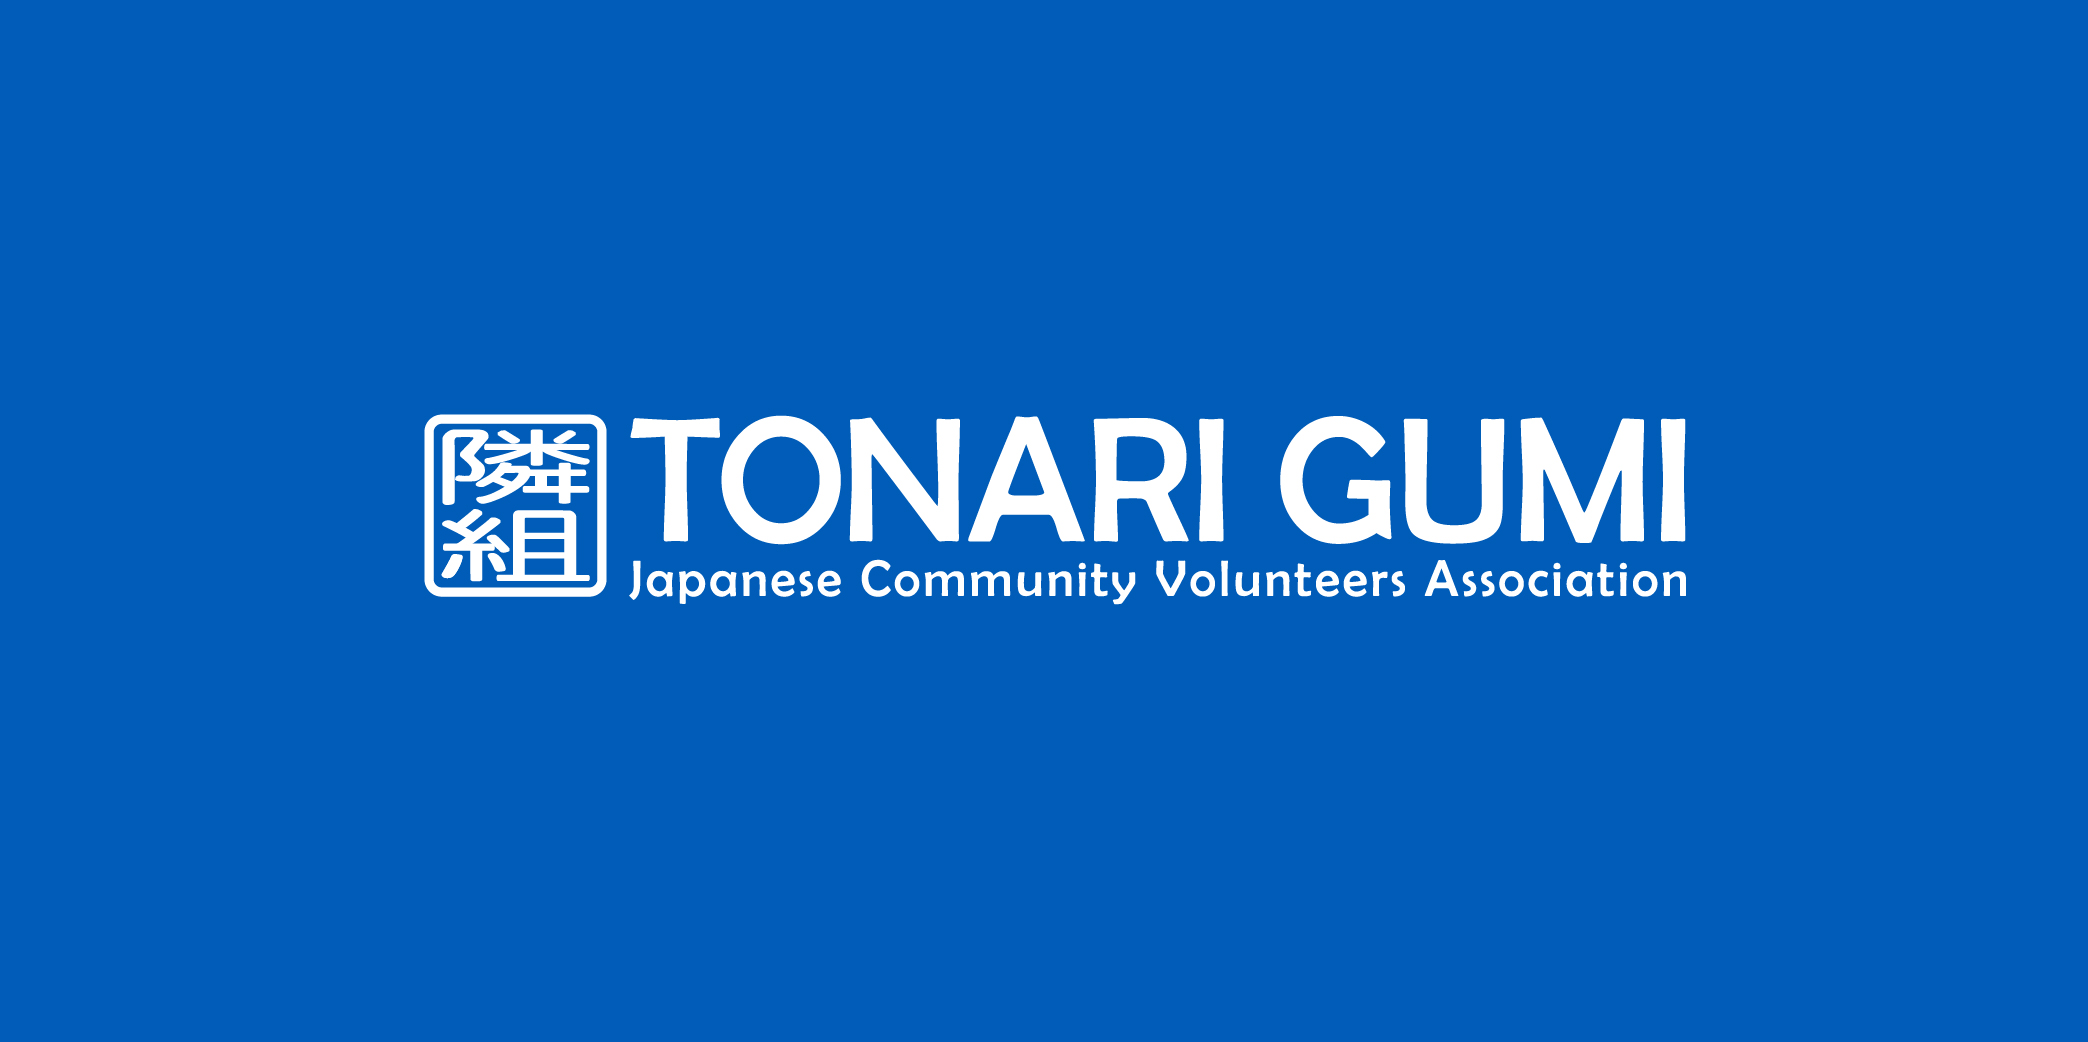 A thumbnail image for Tonari Gumi